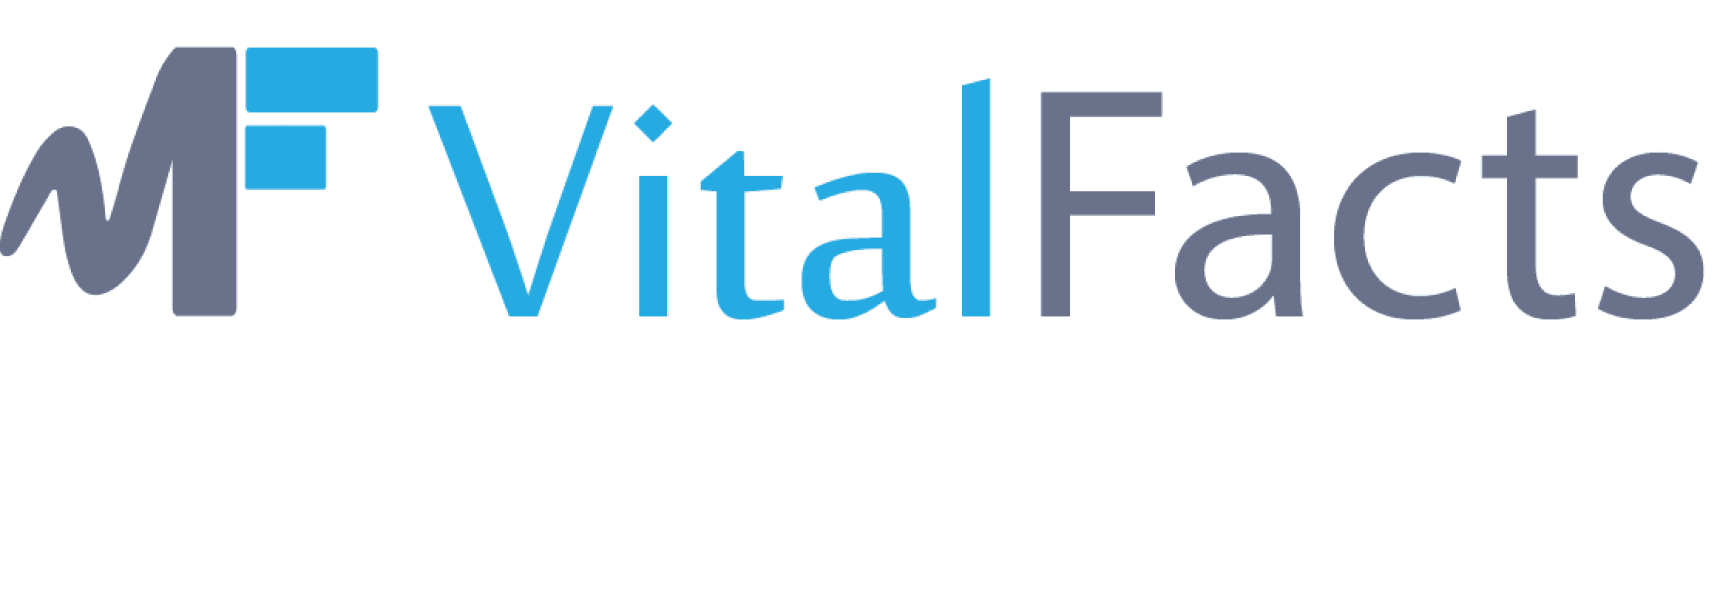 VitalFacts logo